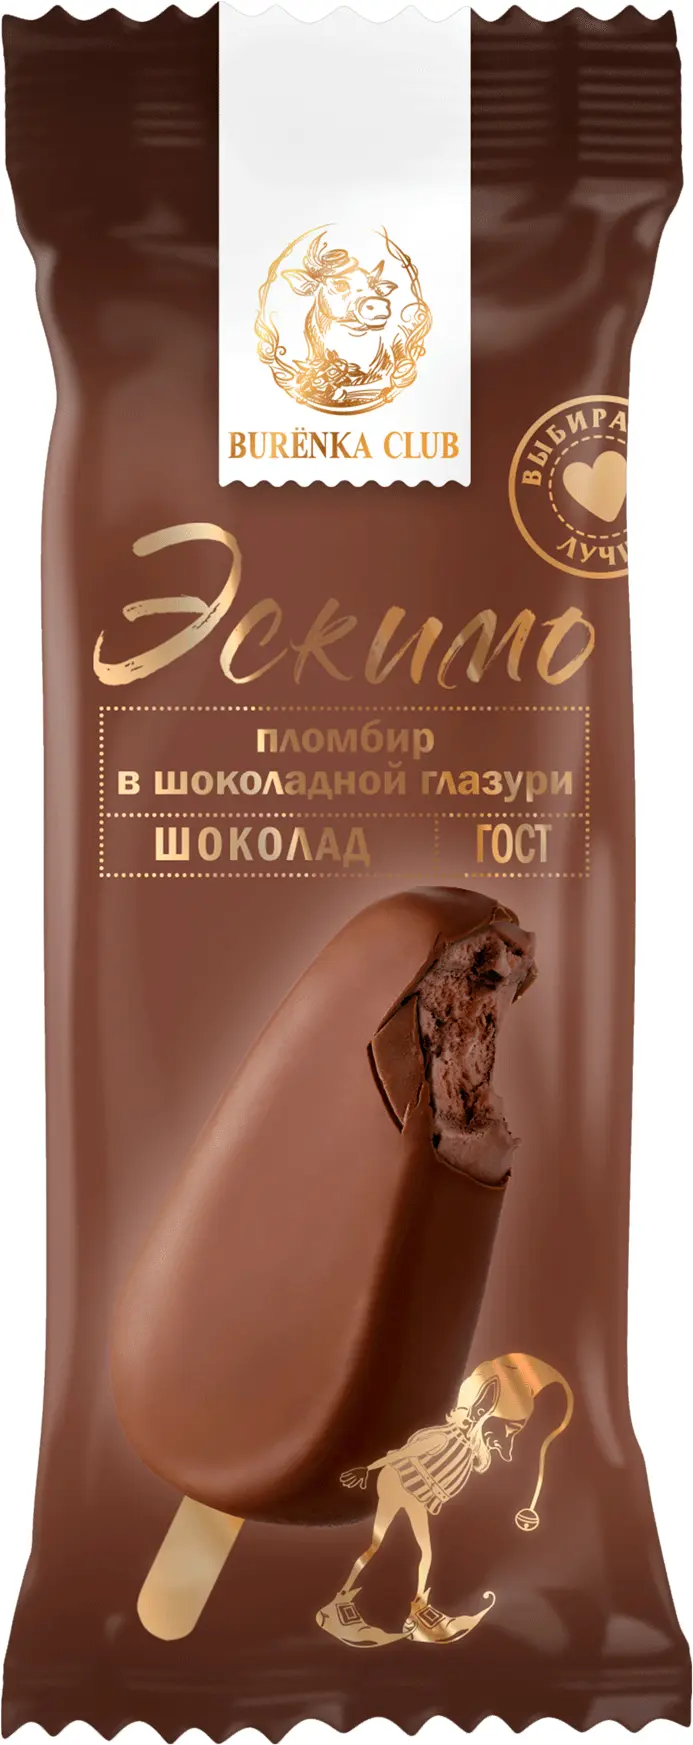 Мороженое Буренка Клаб Эскимо Пломбир шоколадный 70г без заменителя молочн. жира